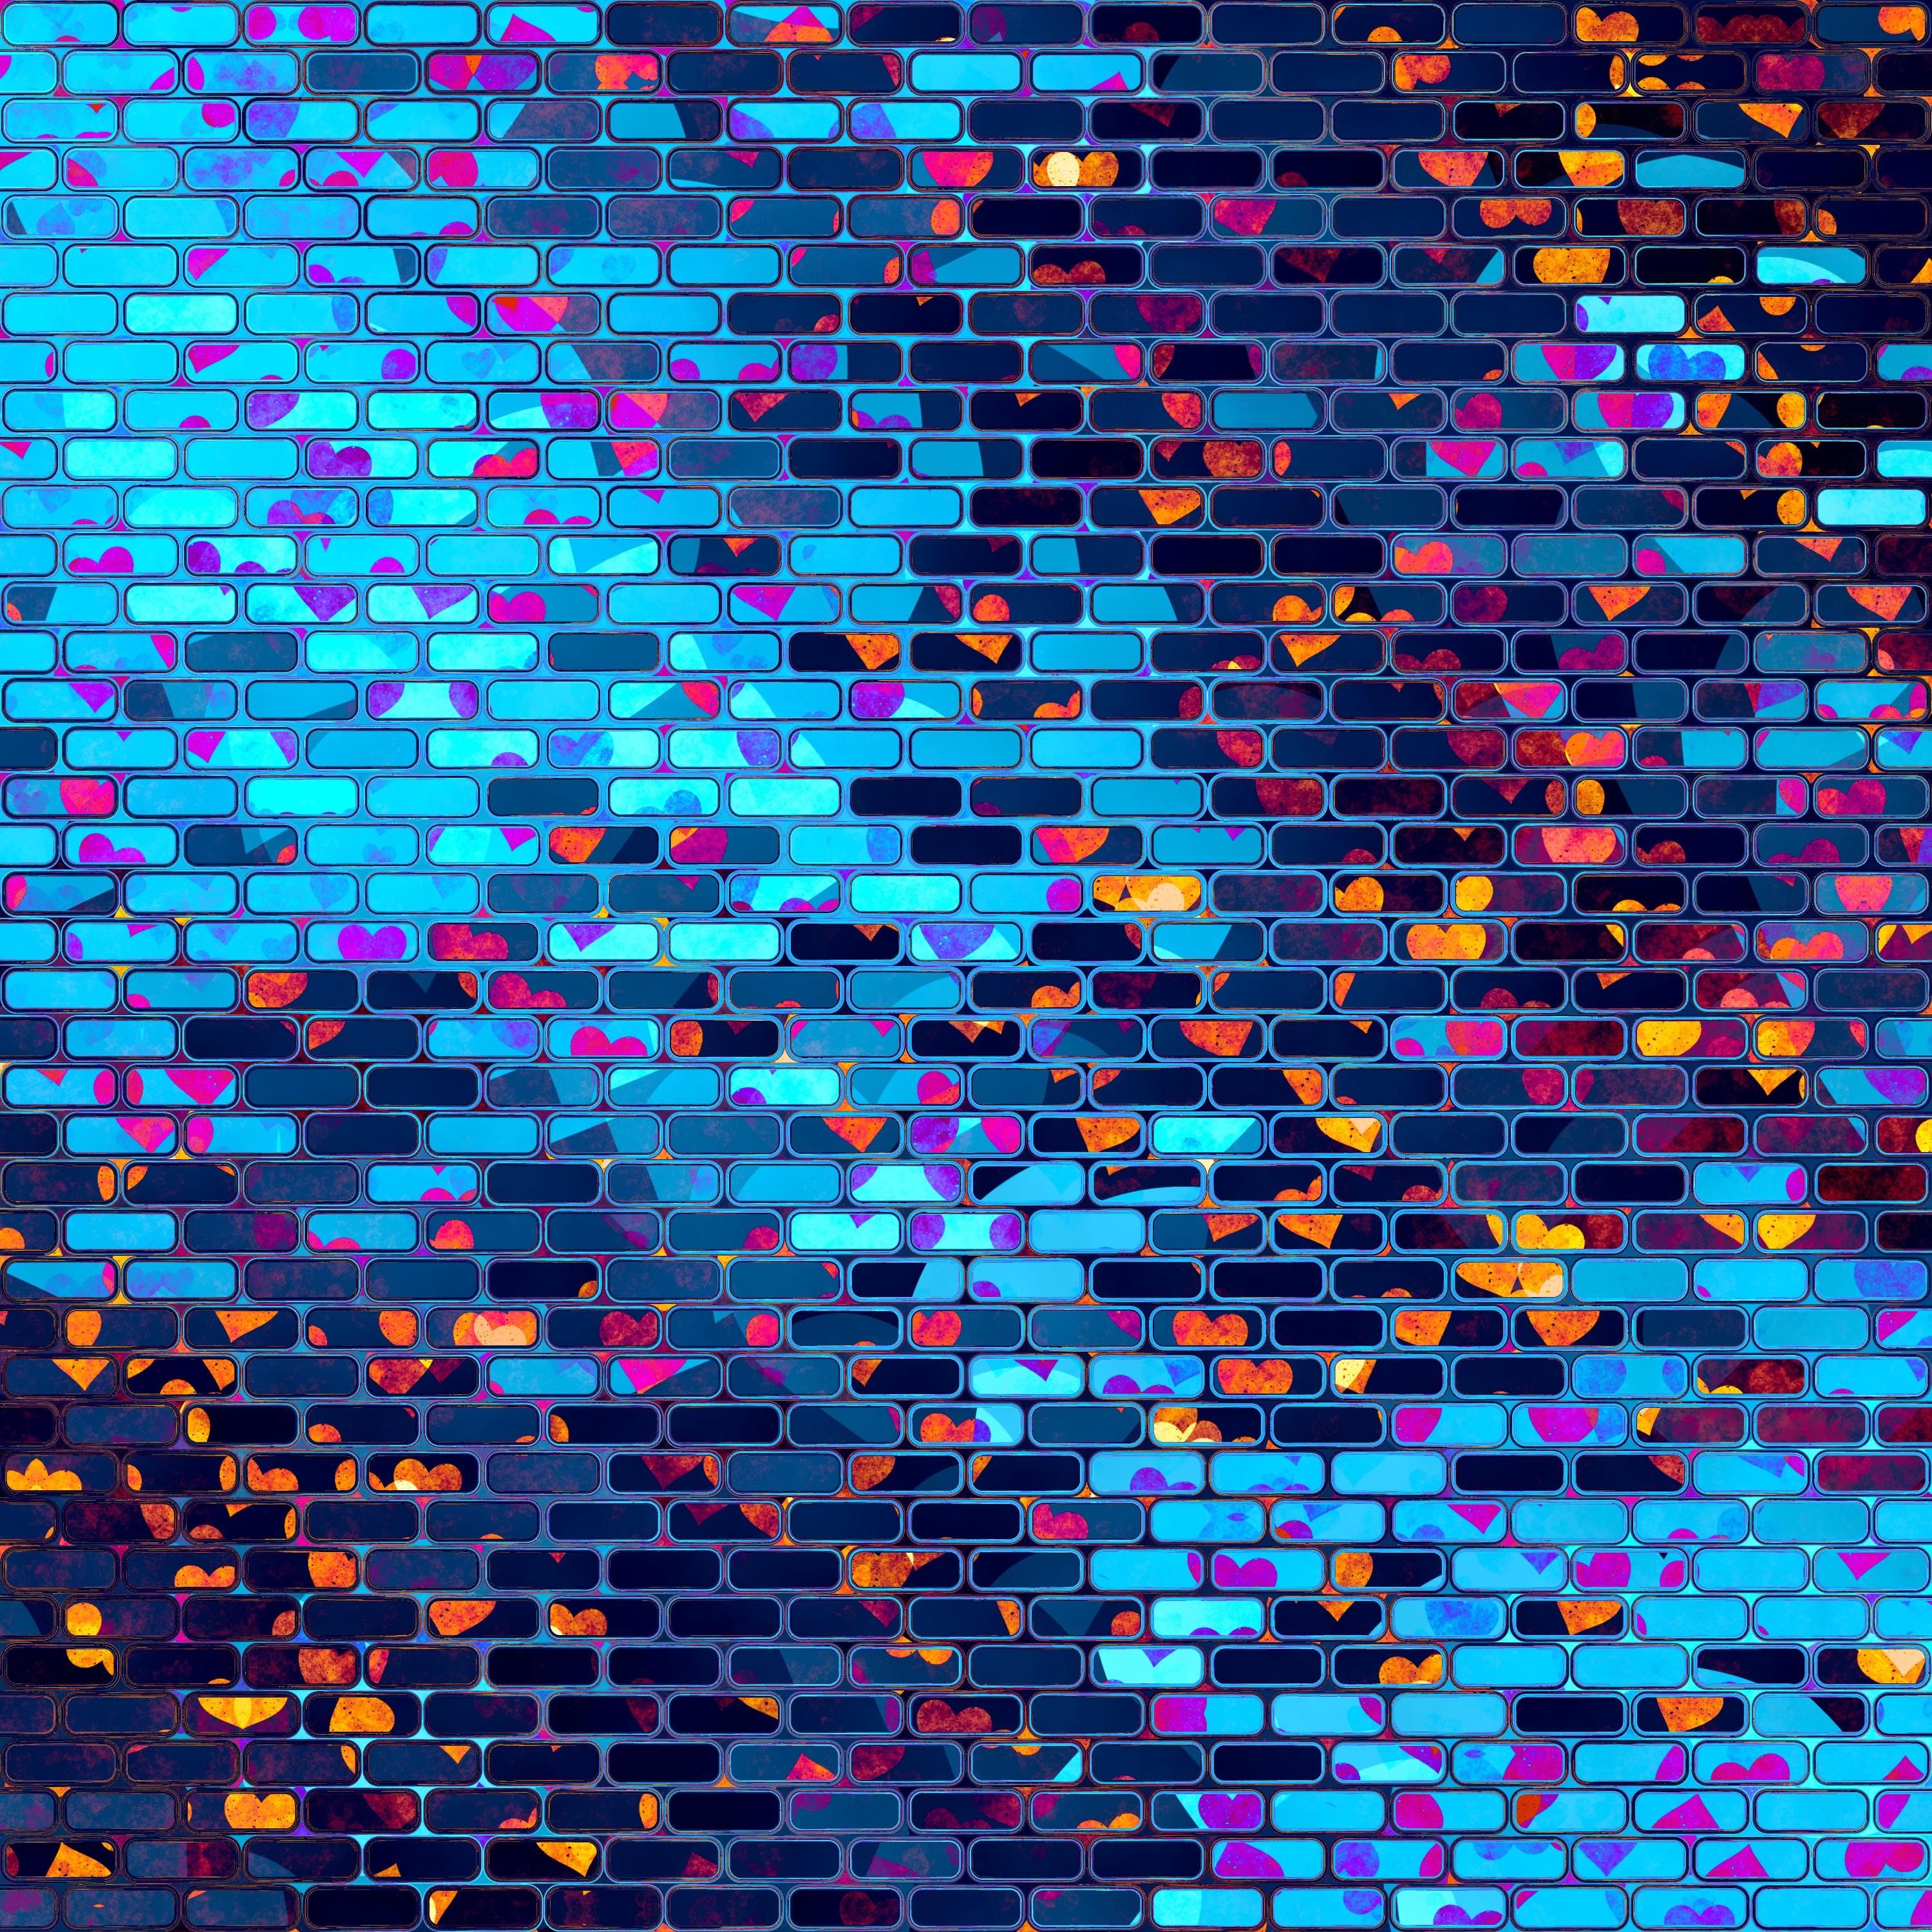 Wallpaper Bricks, Neon, Love hearts, Pattern, HD, Abstract